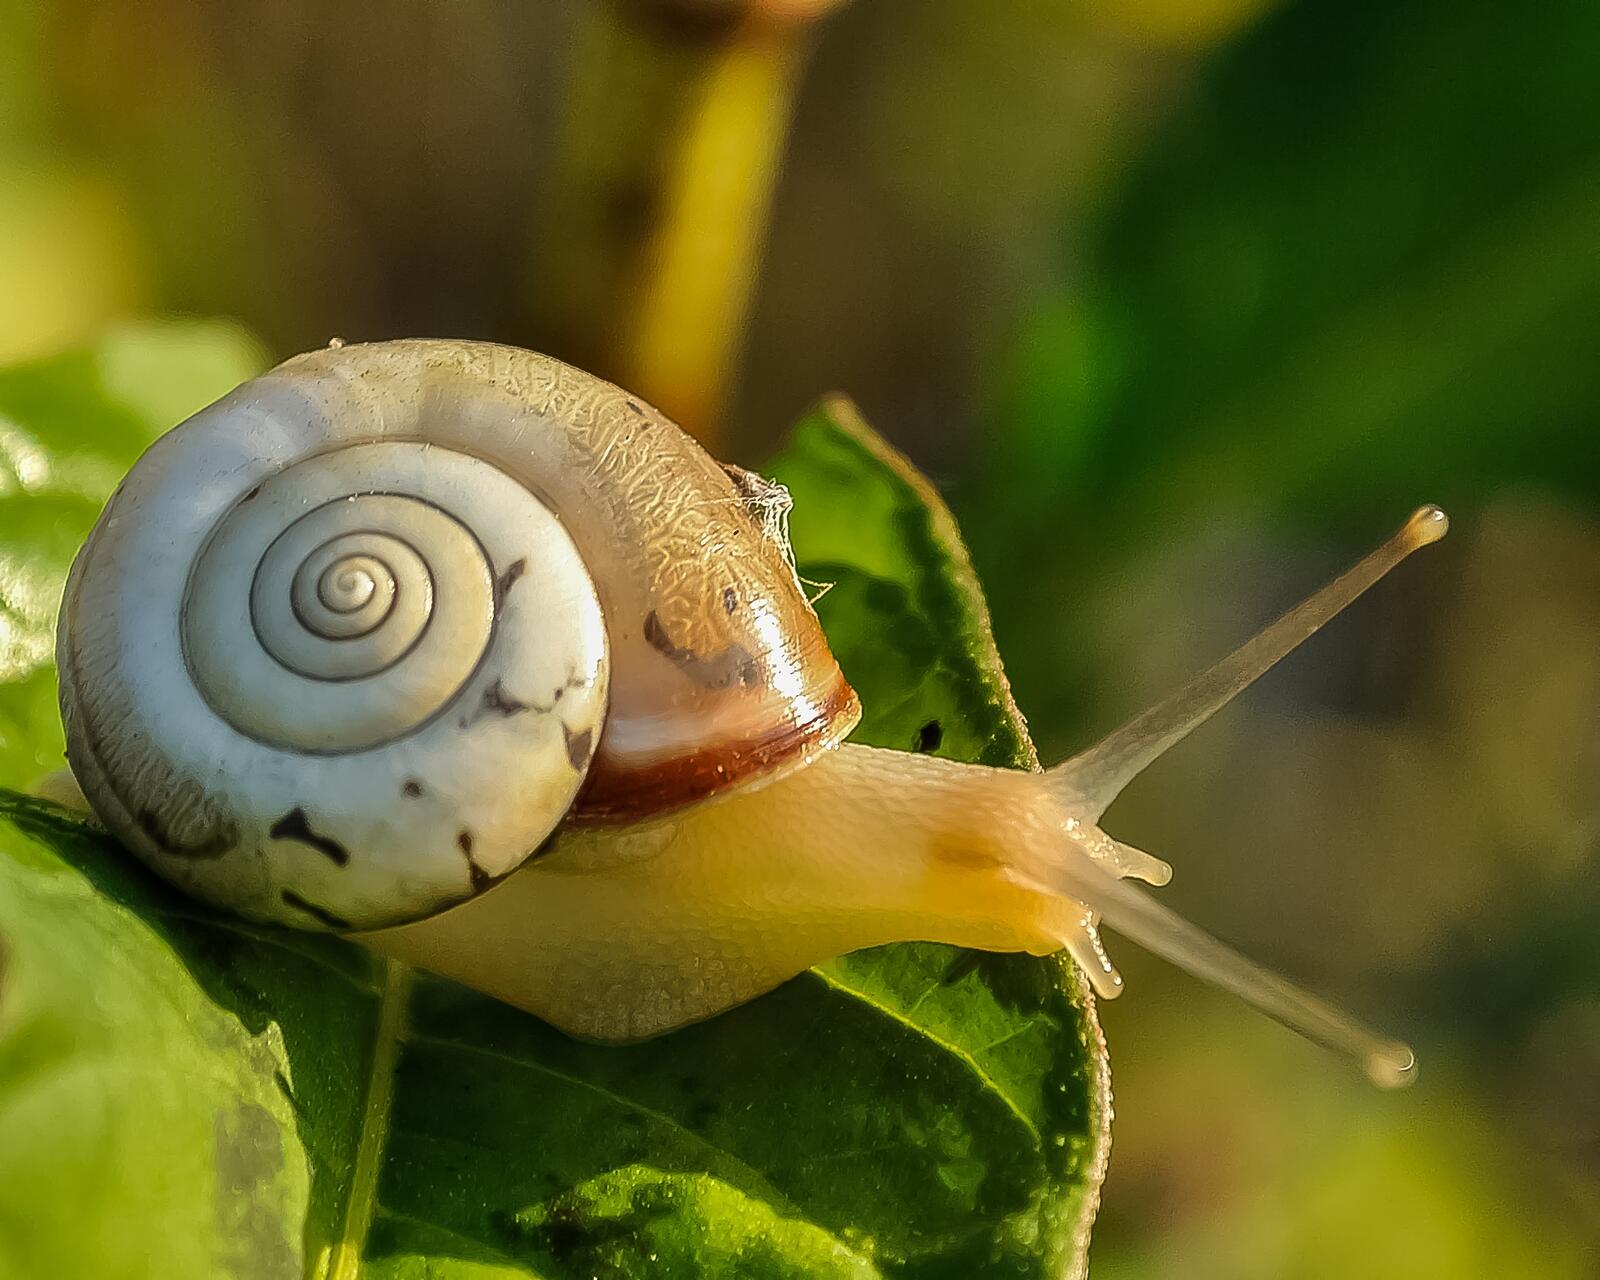 Free photo A close-up of a land snail.